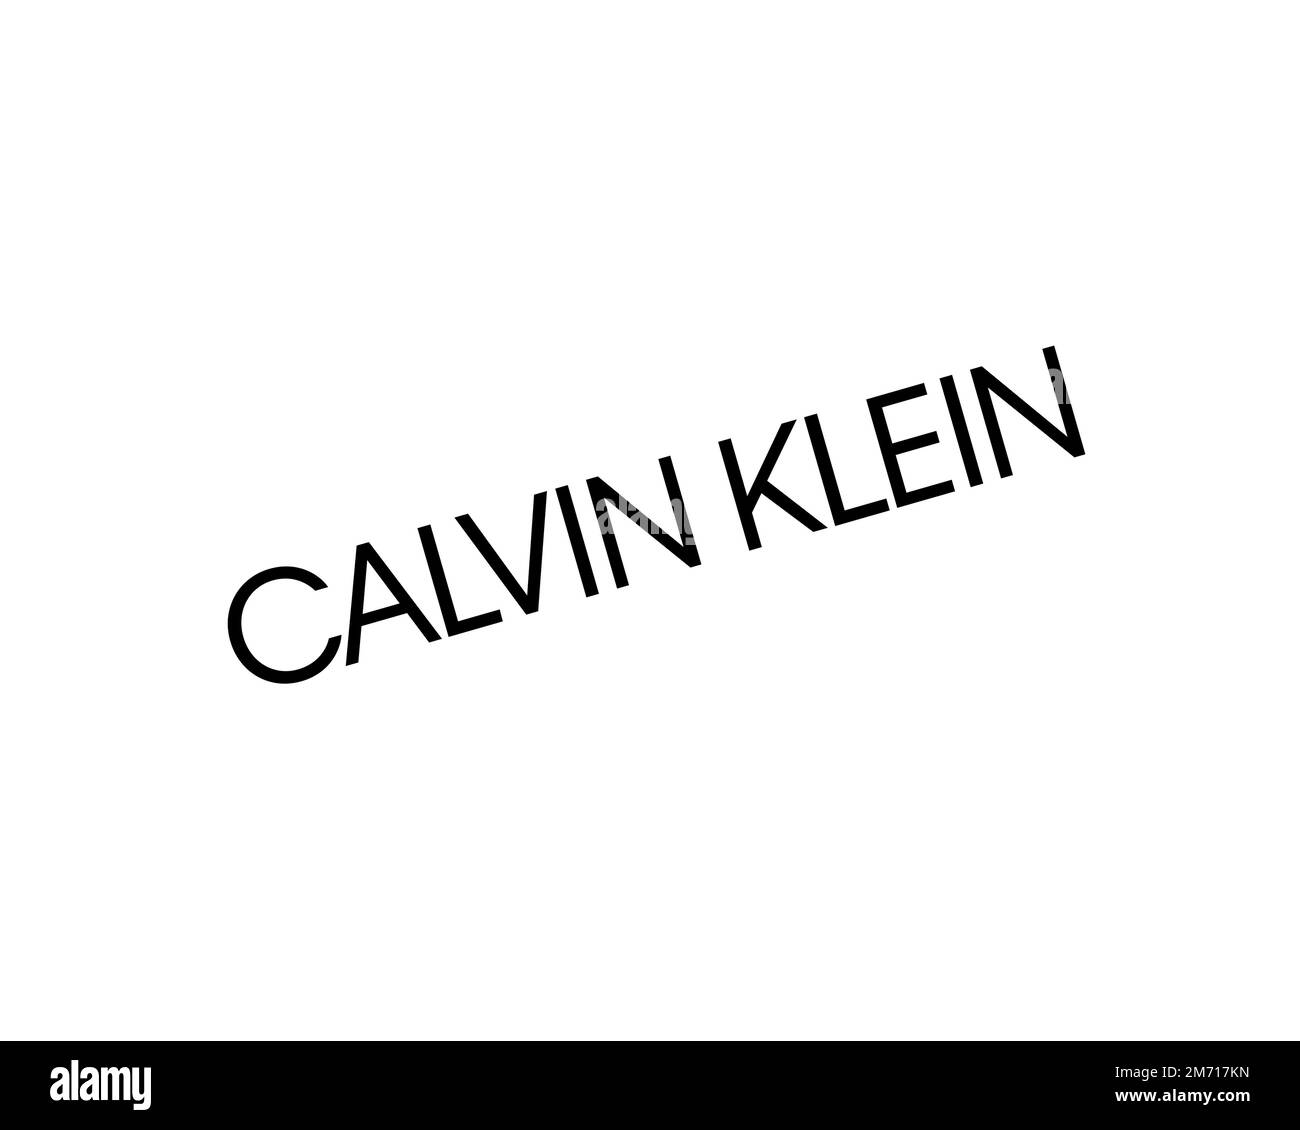 Calvin klein symbol Black and White Stock Photos & Images - Alamy